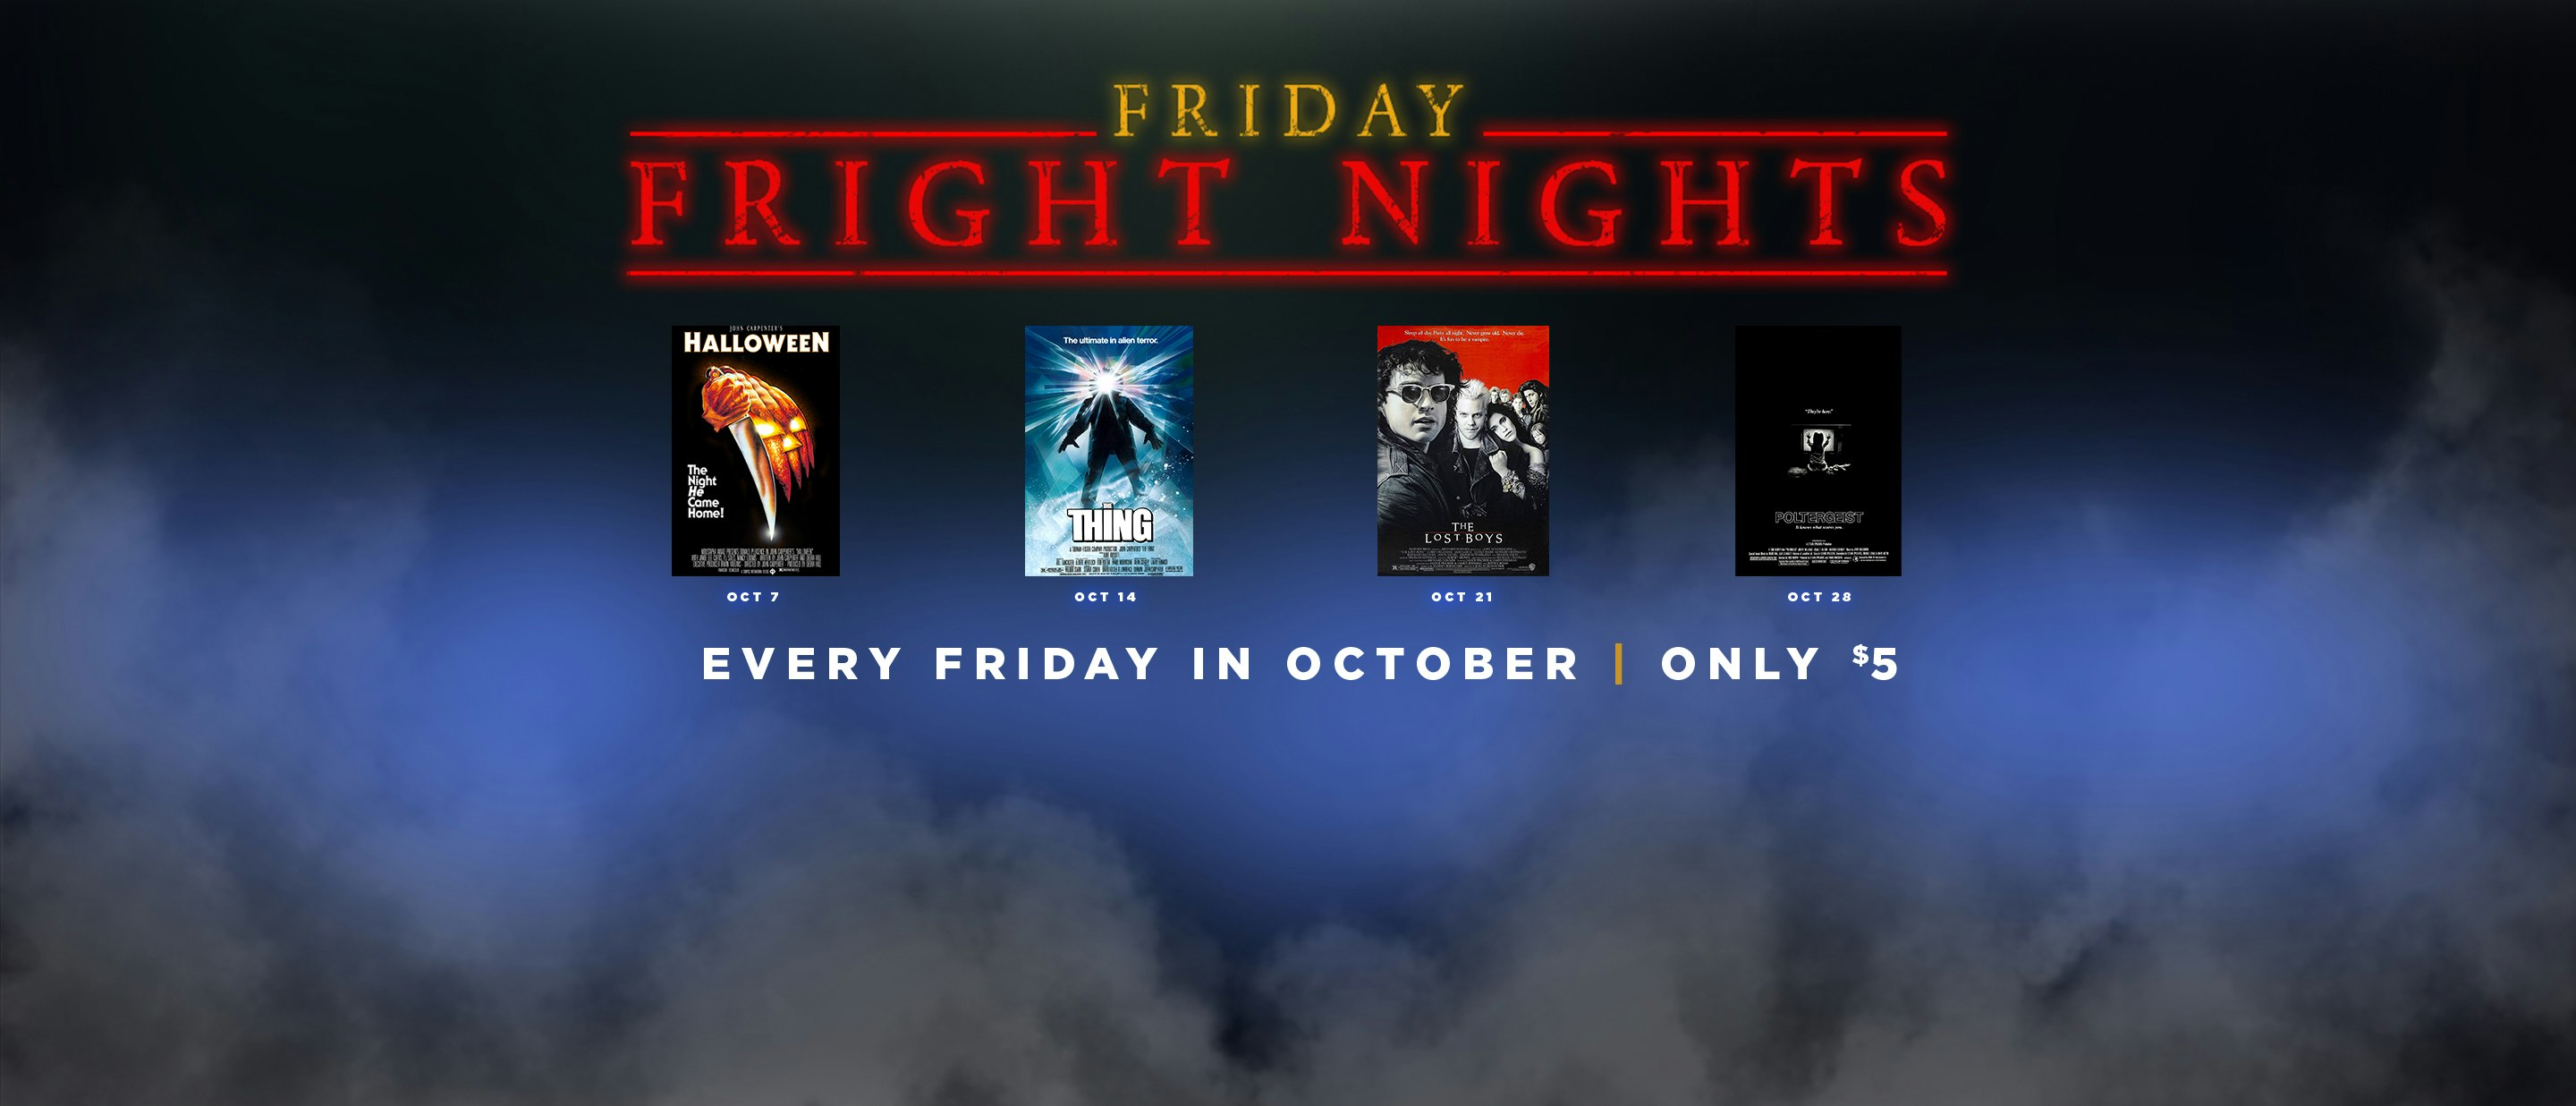 Friday Fright Nights